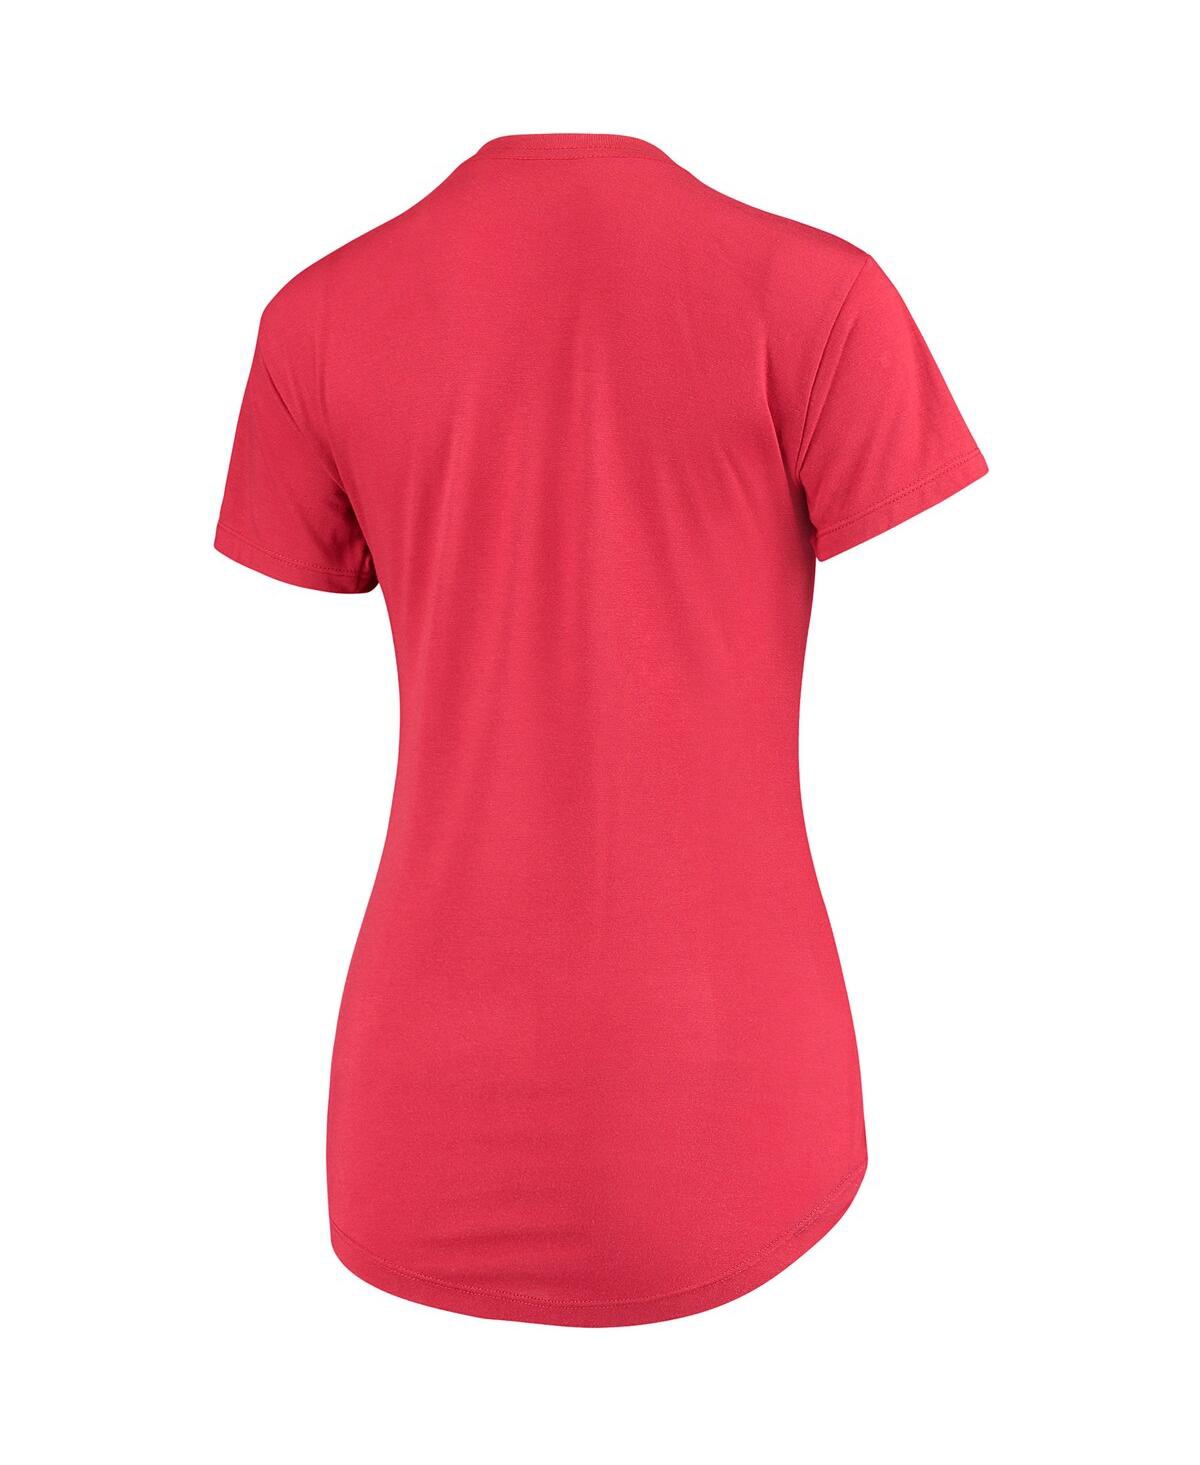 Shop Sportiqe Women's  Red Toronto Raptors Phoebe Super Soft Tri-blend T-shirt